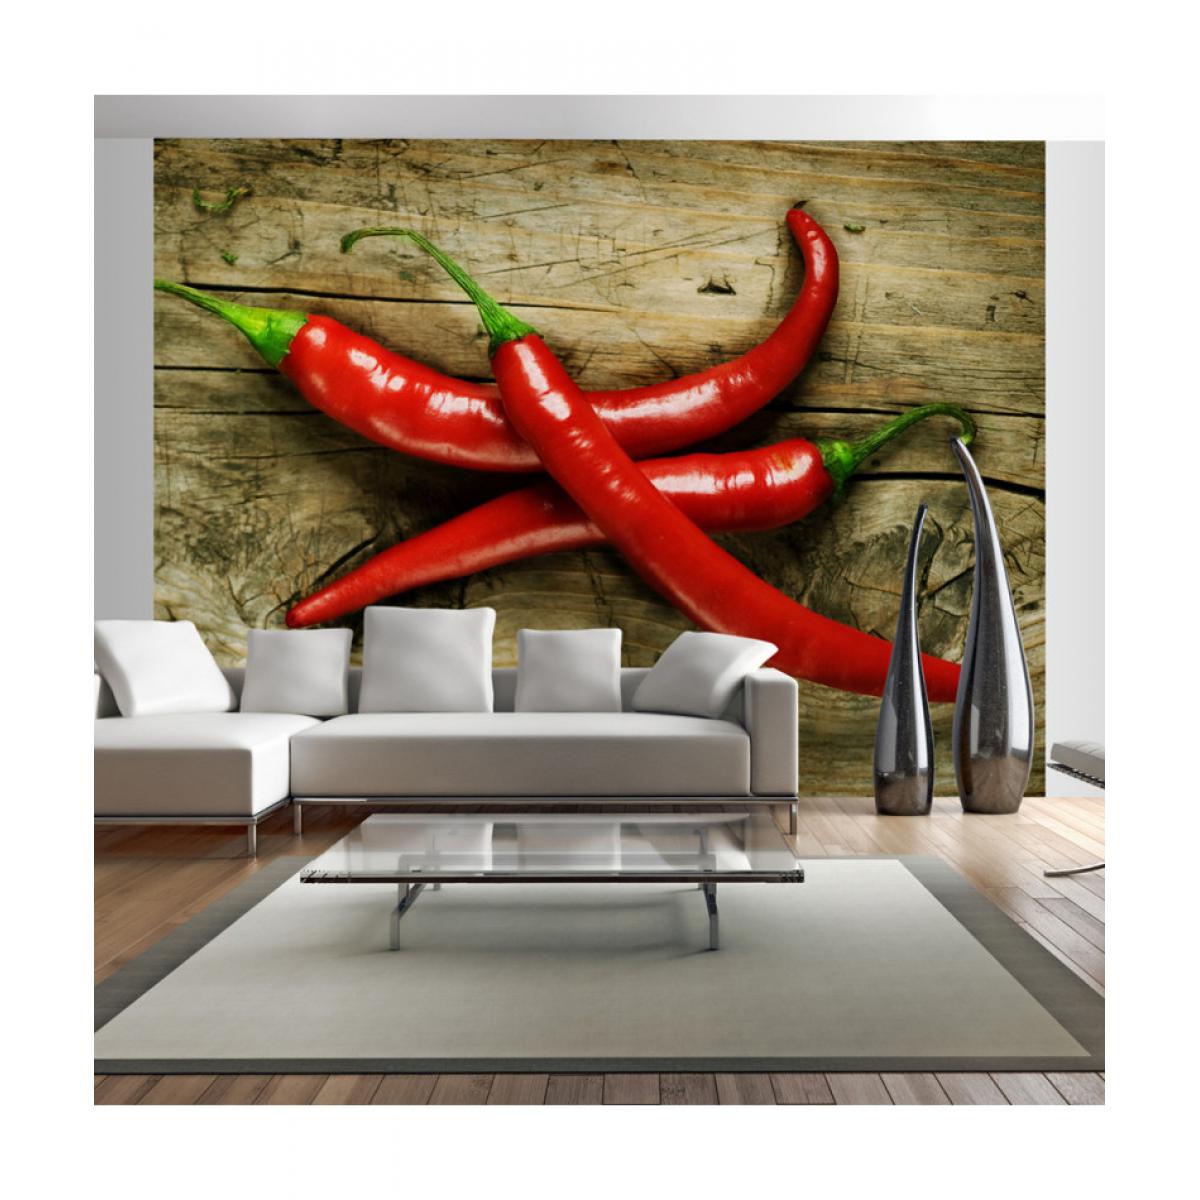 Artgeist - Papier peint - Spicy chili peppers 300x231 - Papier peint